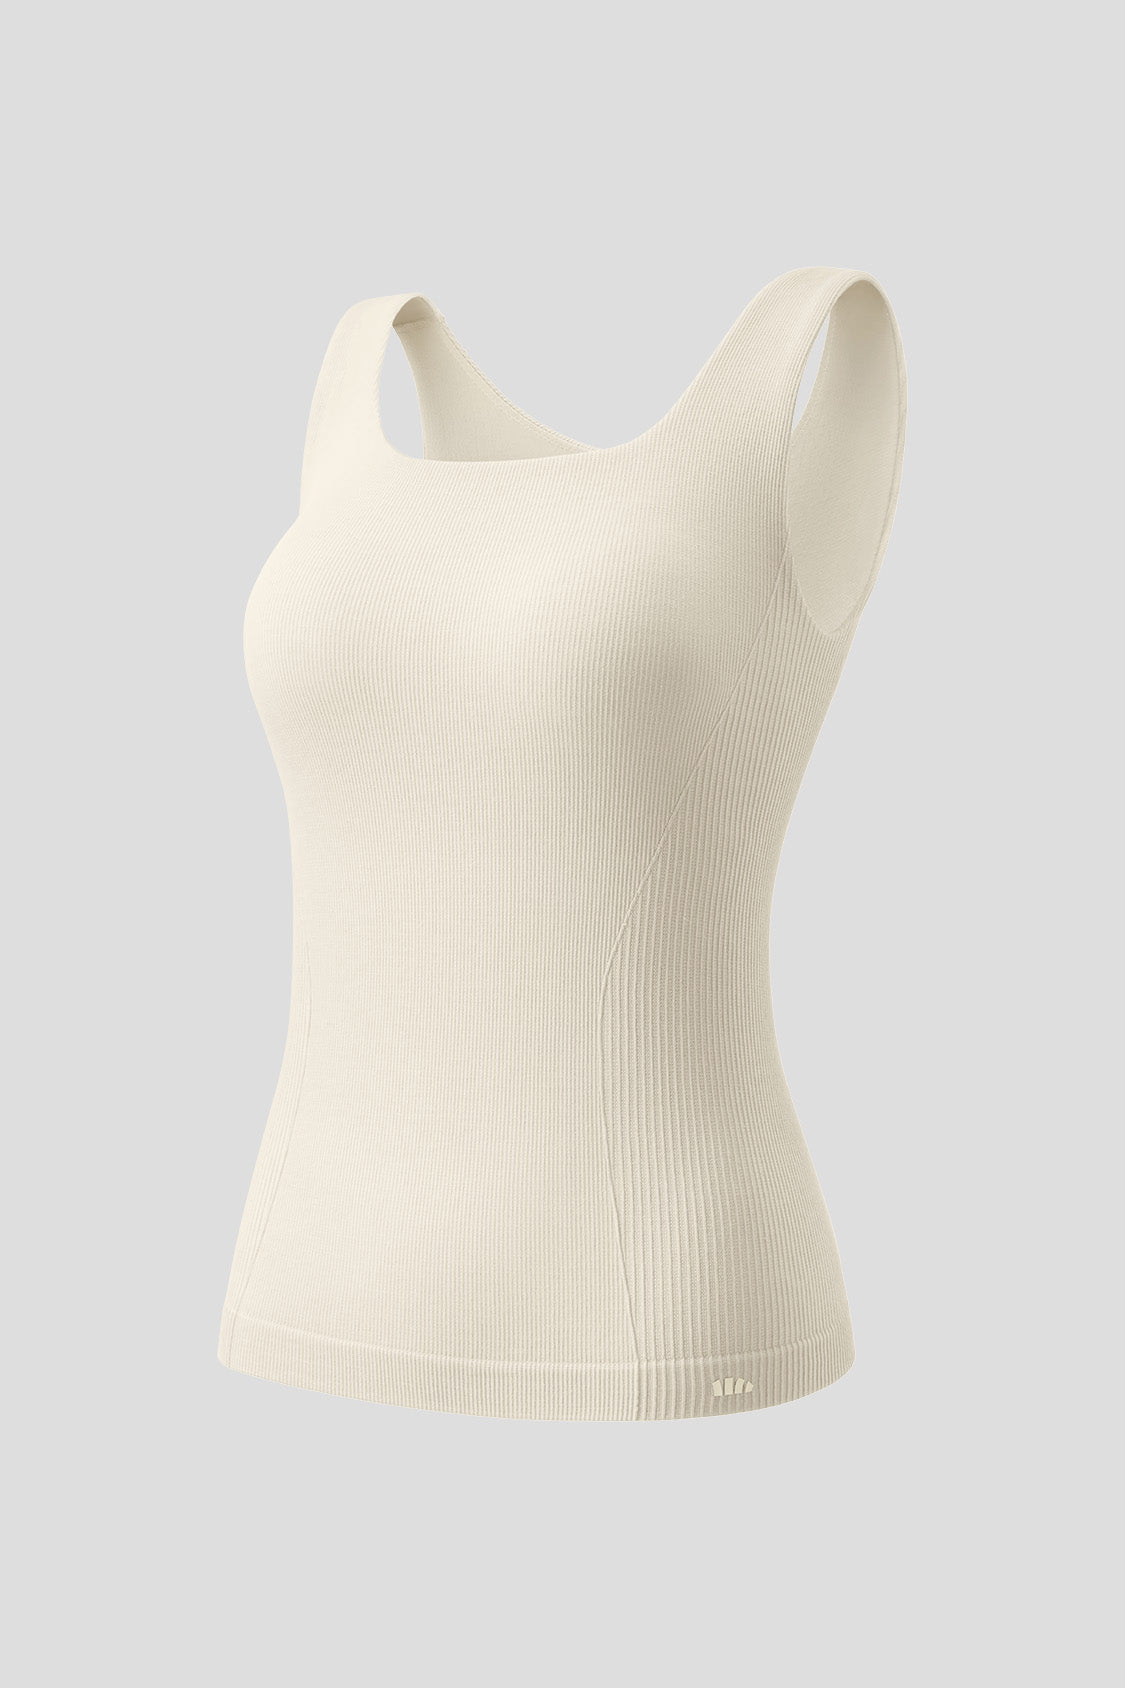 beneunder women's aw bra in thermal vest #color_beige